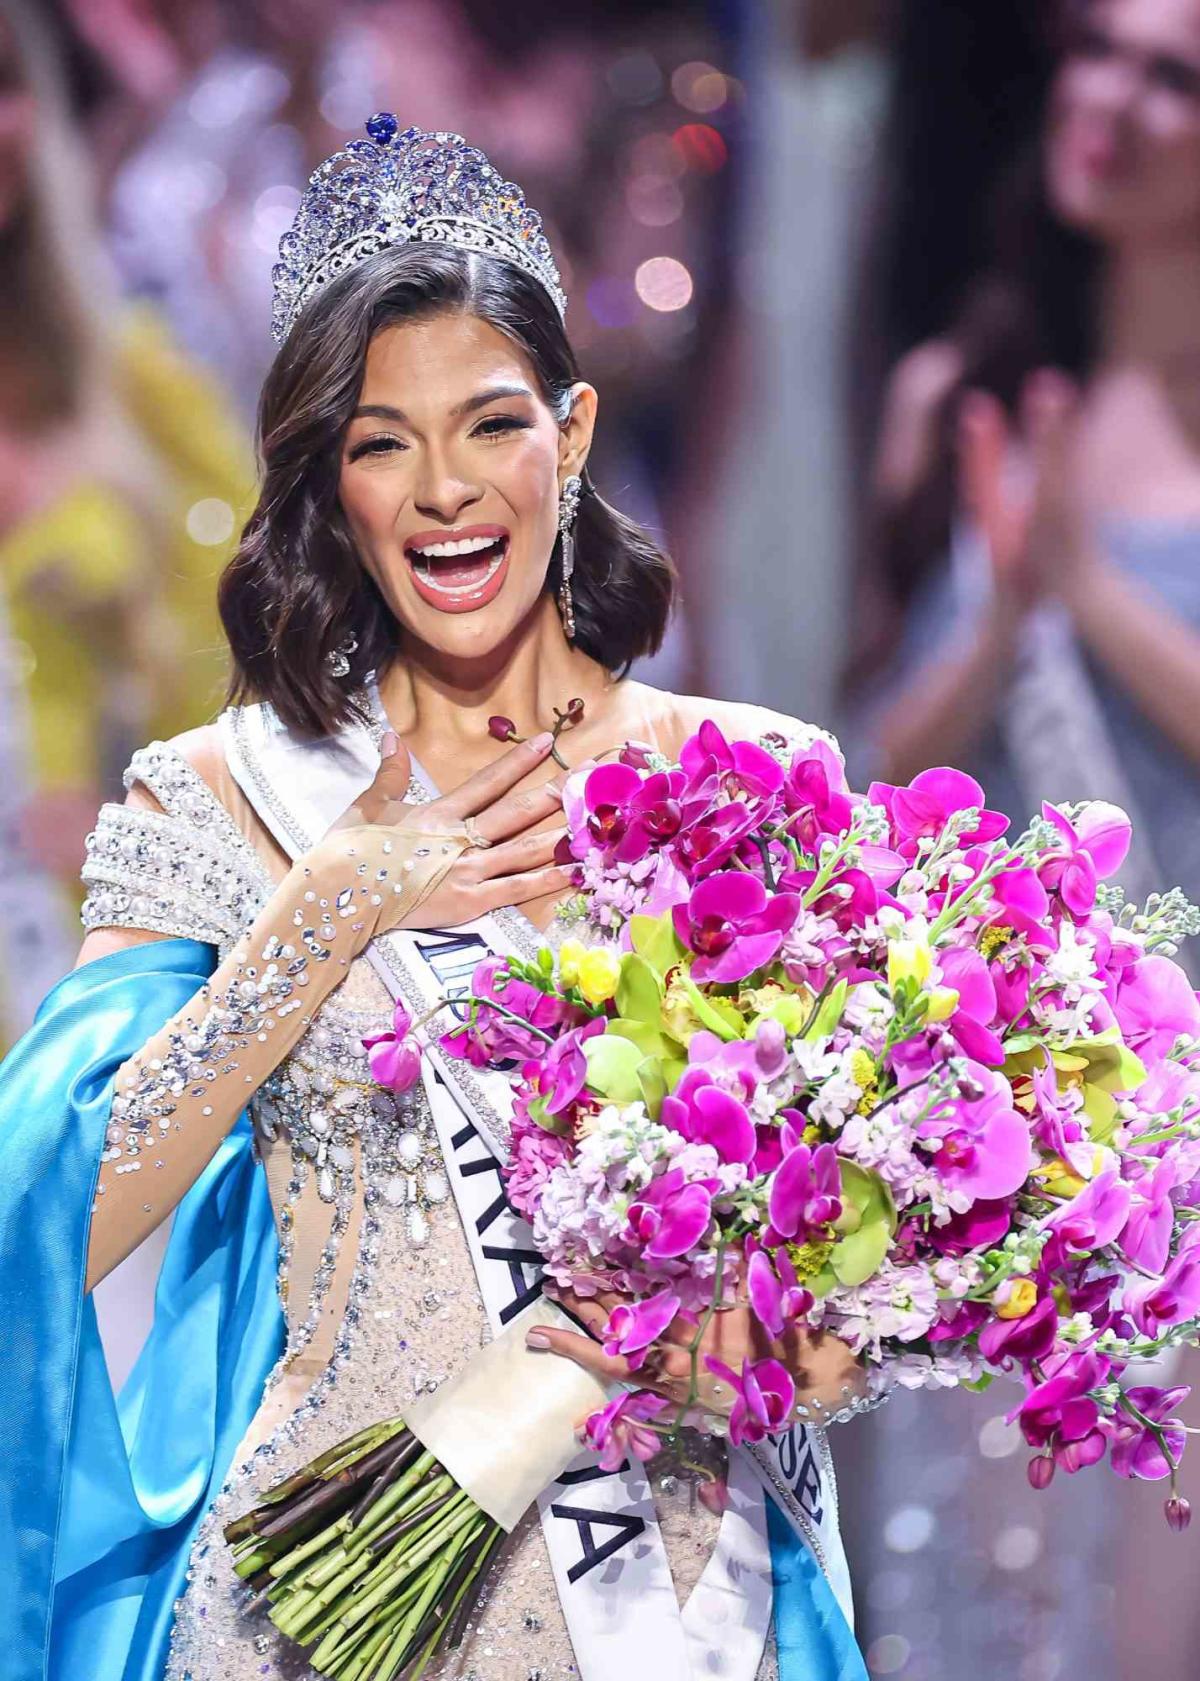 Sheynnis Palacios al natural así luce la ganadora del Miss Universo